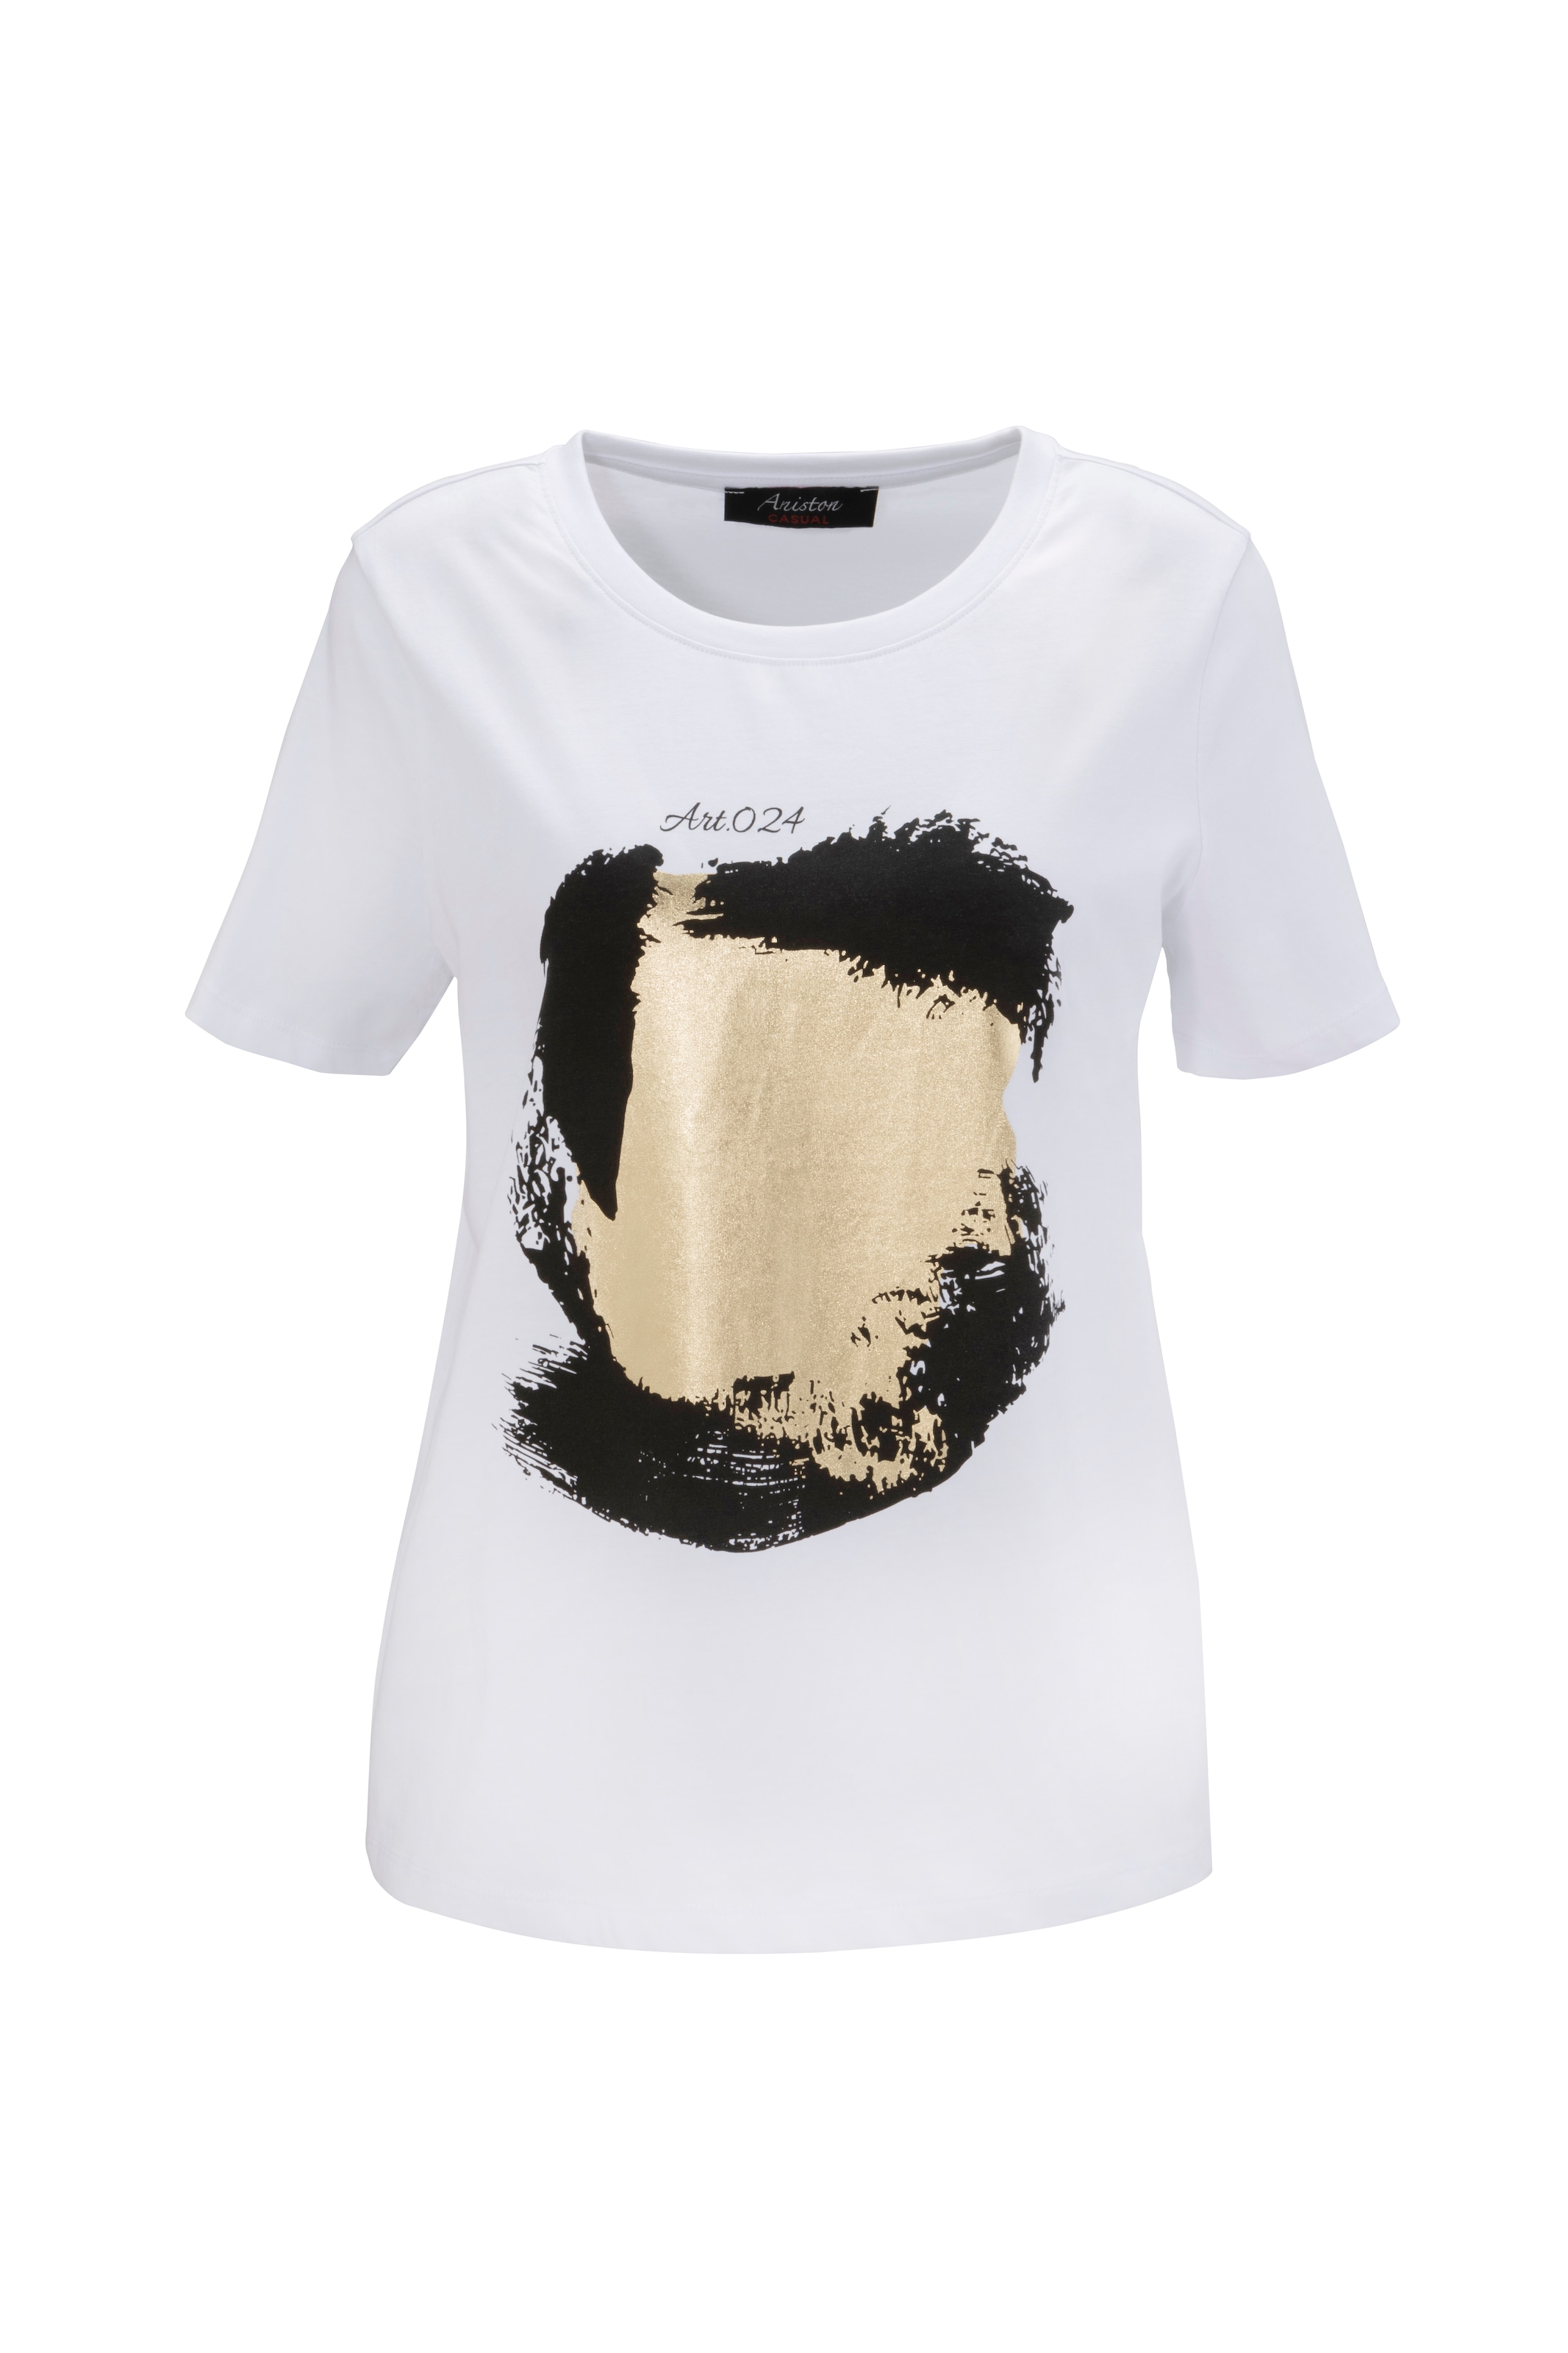 Aniston CASUAL T-Shirt, mit goldfarbenem Foliendruck verzierter Frontprint - NEUE KOLLEKTION